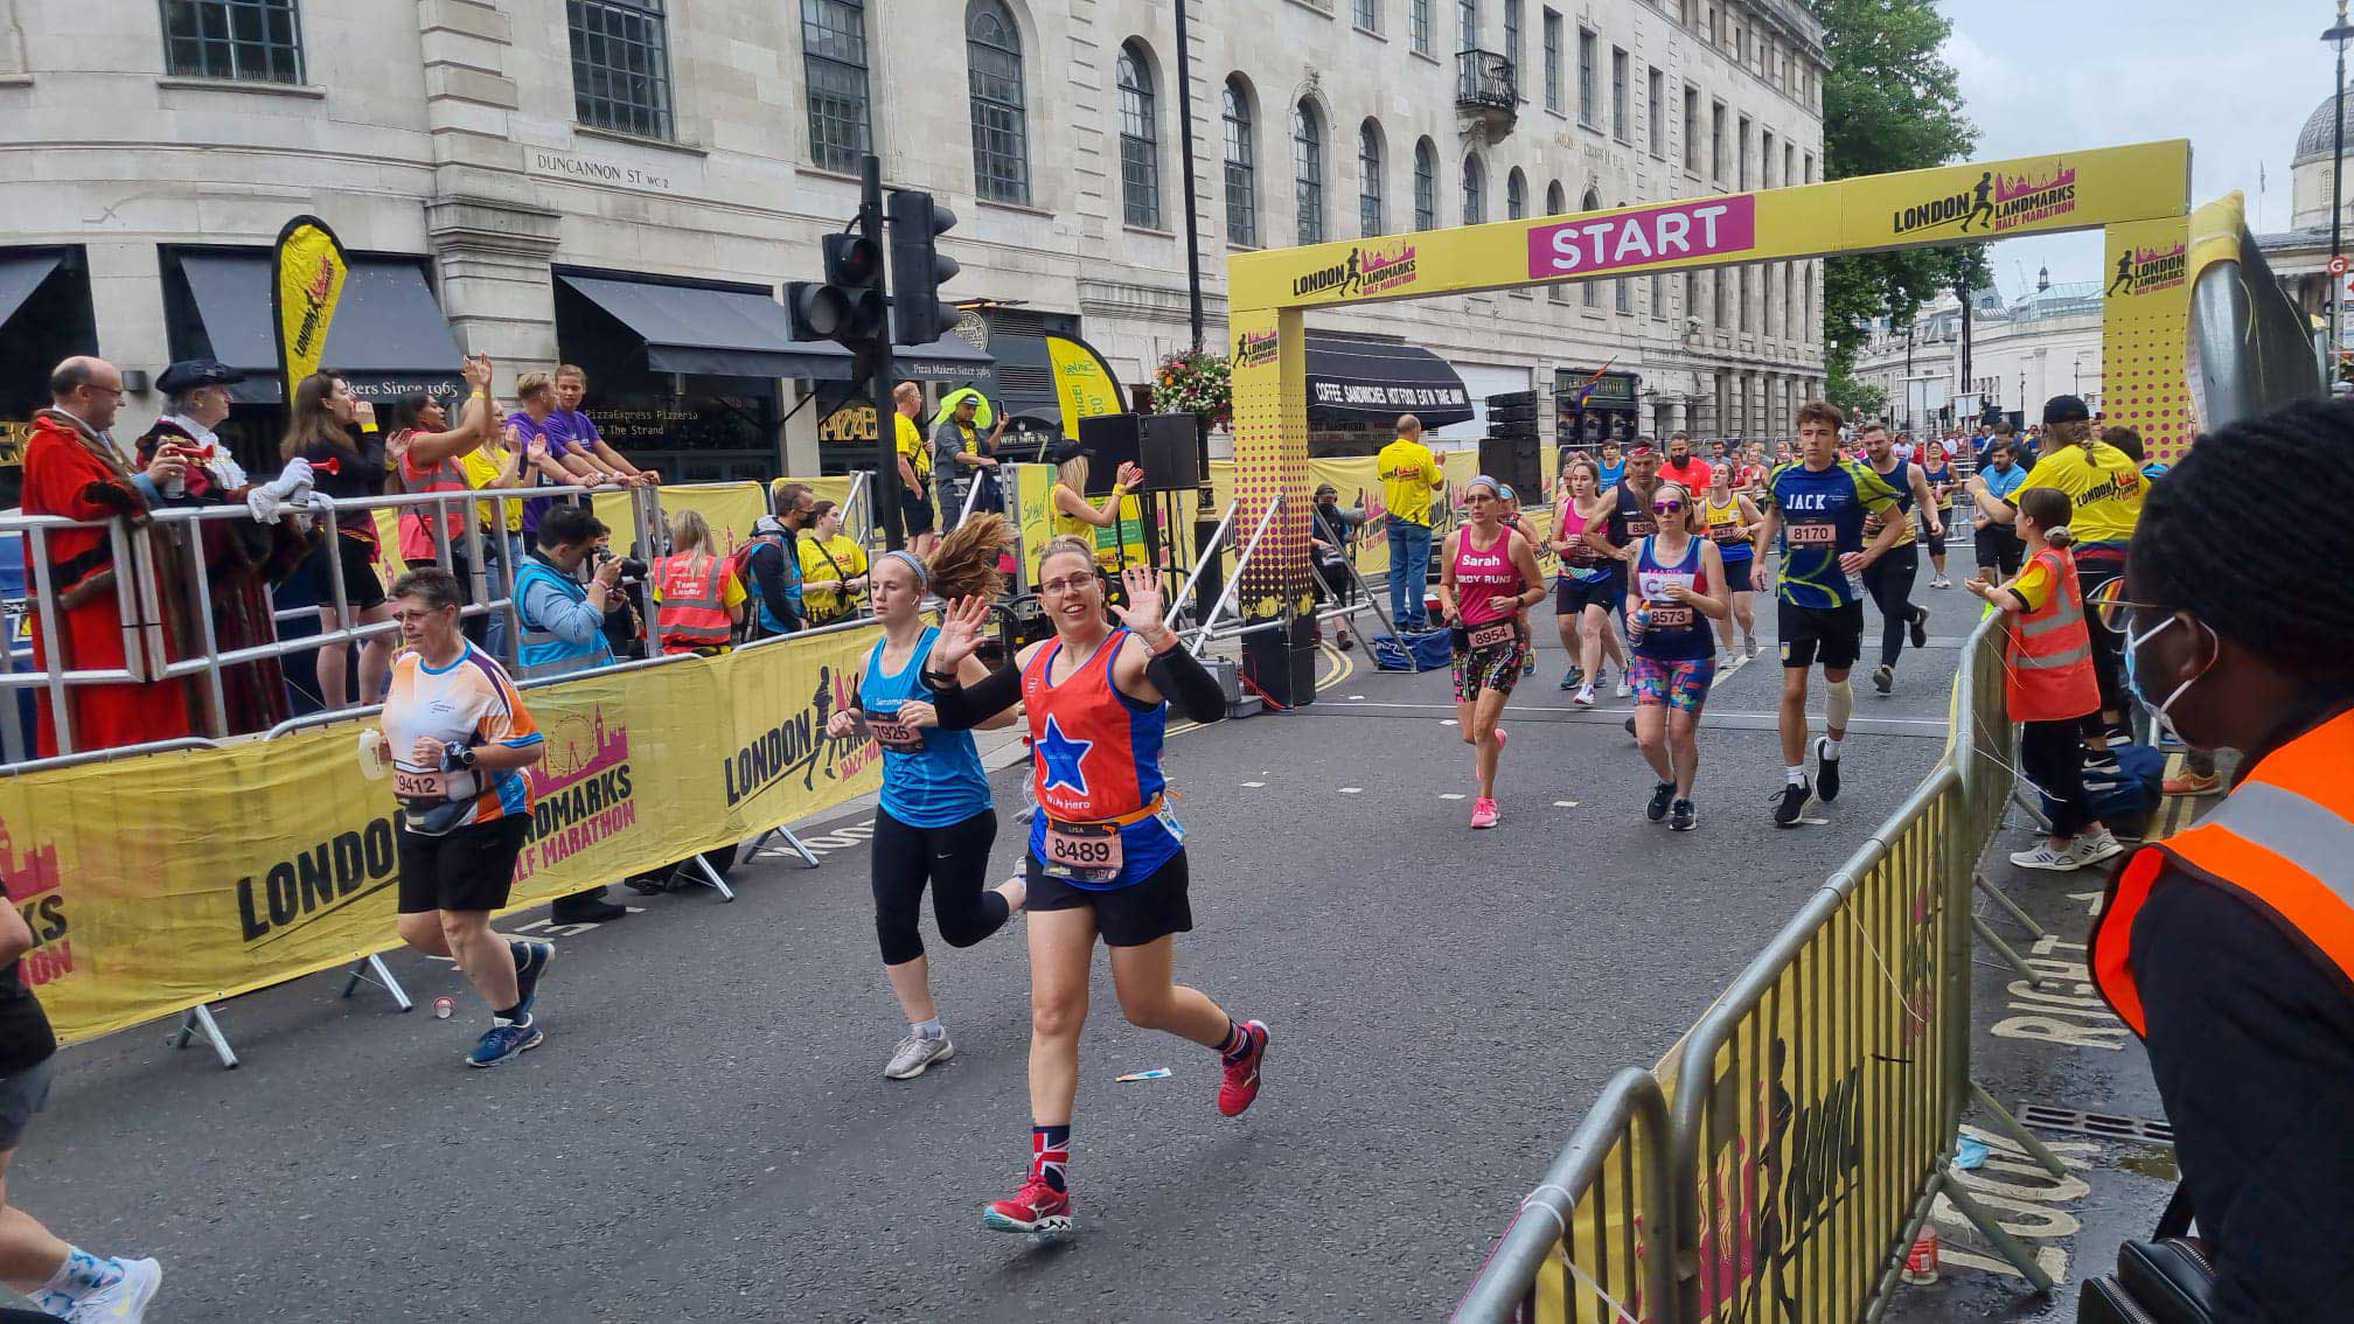 #WishHero, Lisa setting off from the start line of the 2021 London Landmarks Half Marathon.